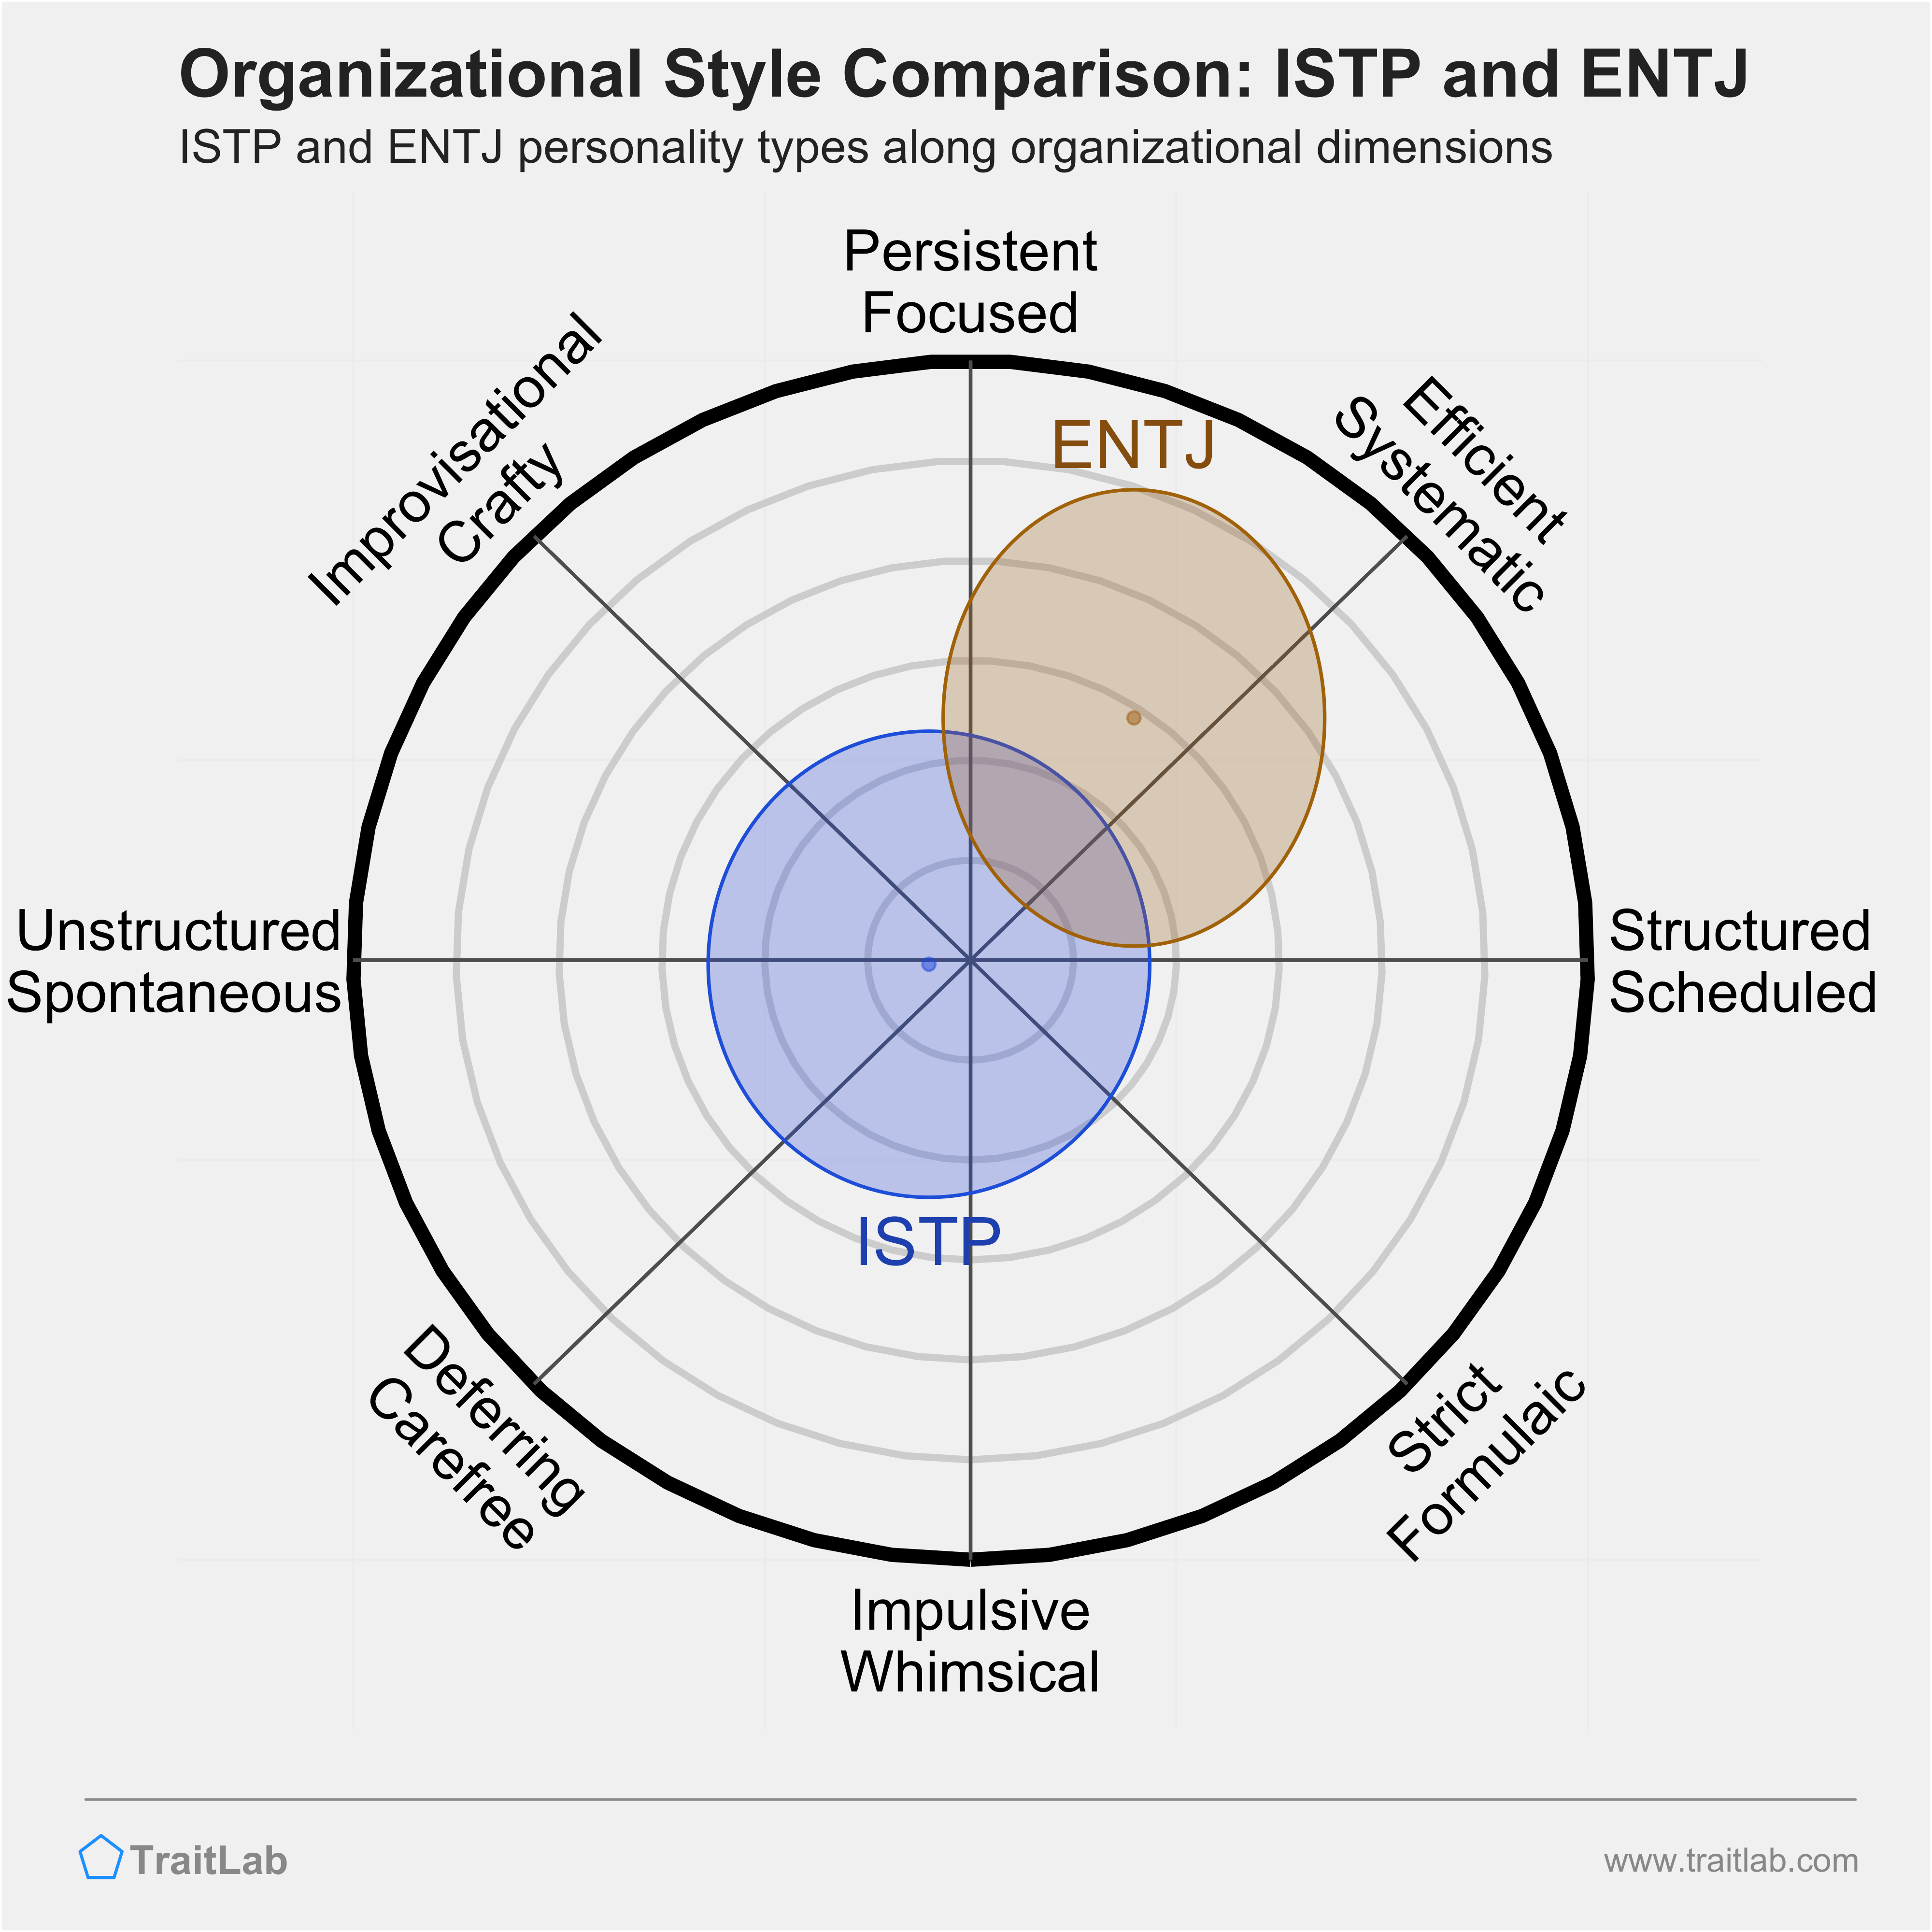 ISTP and ENTJ comparison across organizational dimensions